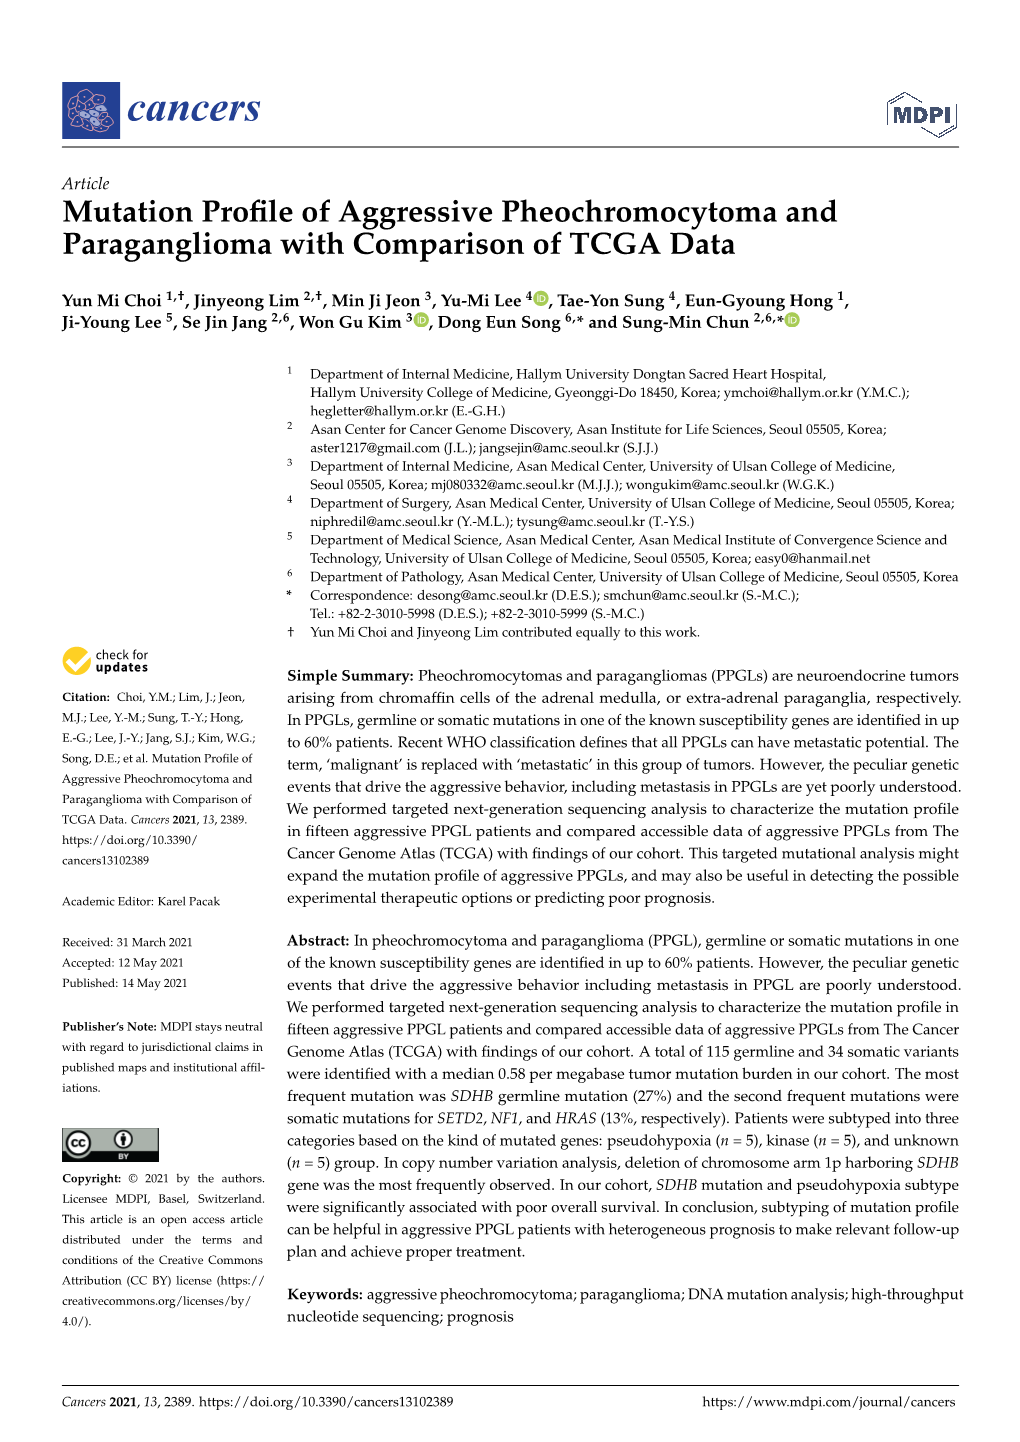 Mutation Profile of Aggressive Pheochromocytoma and Paraganglioma with Comparison of TCGA Data